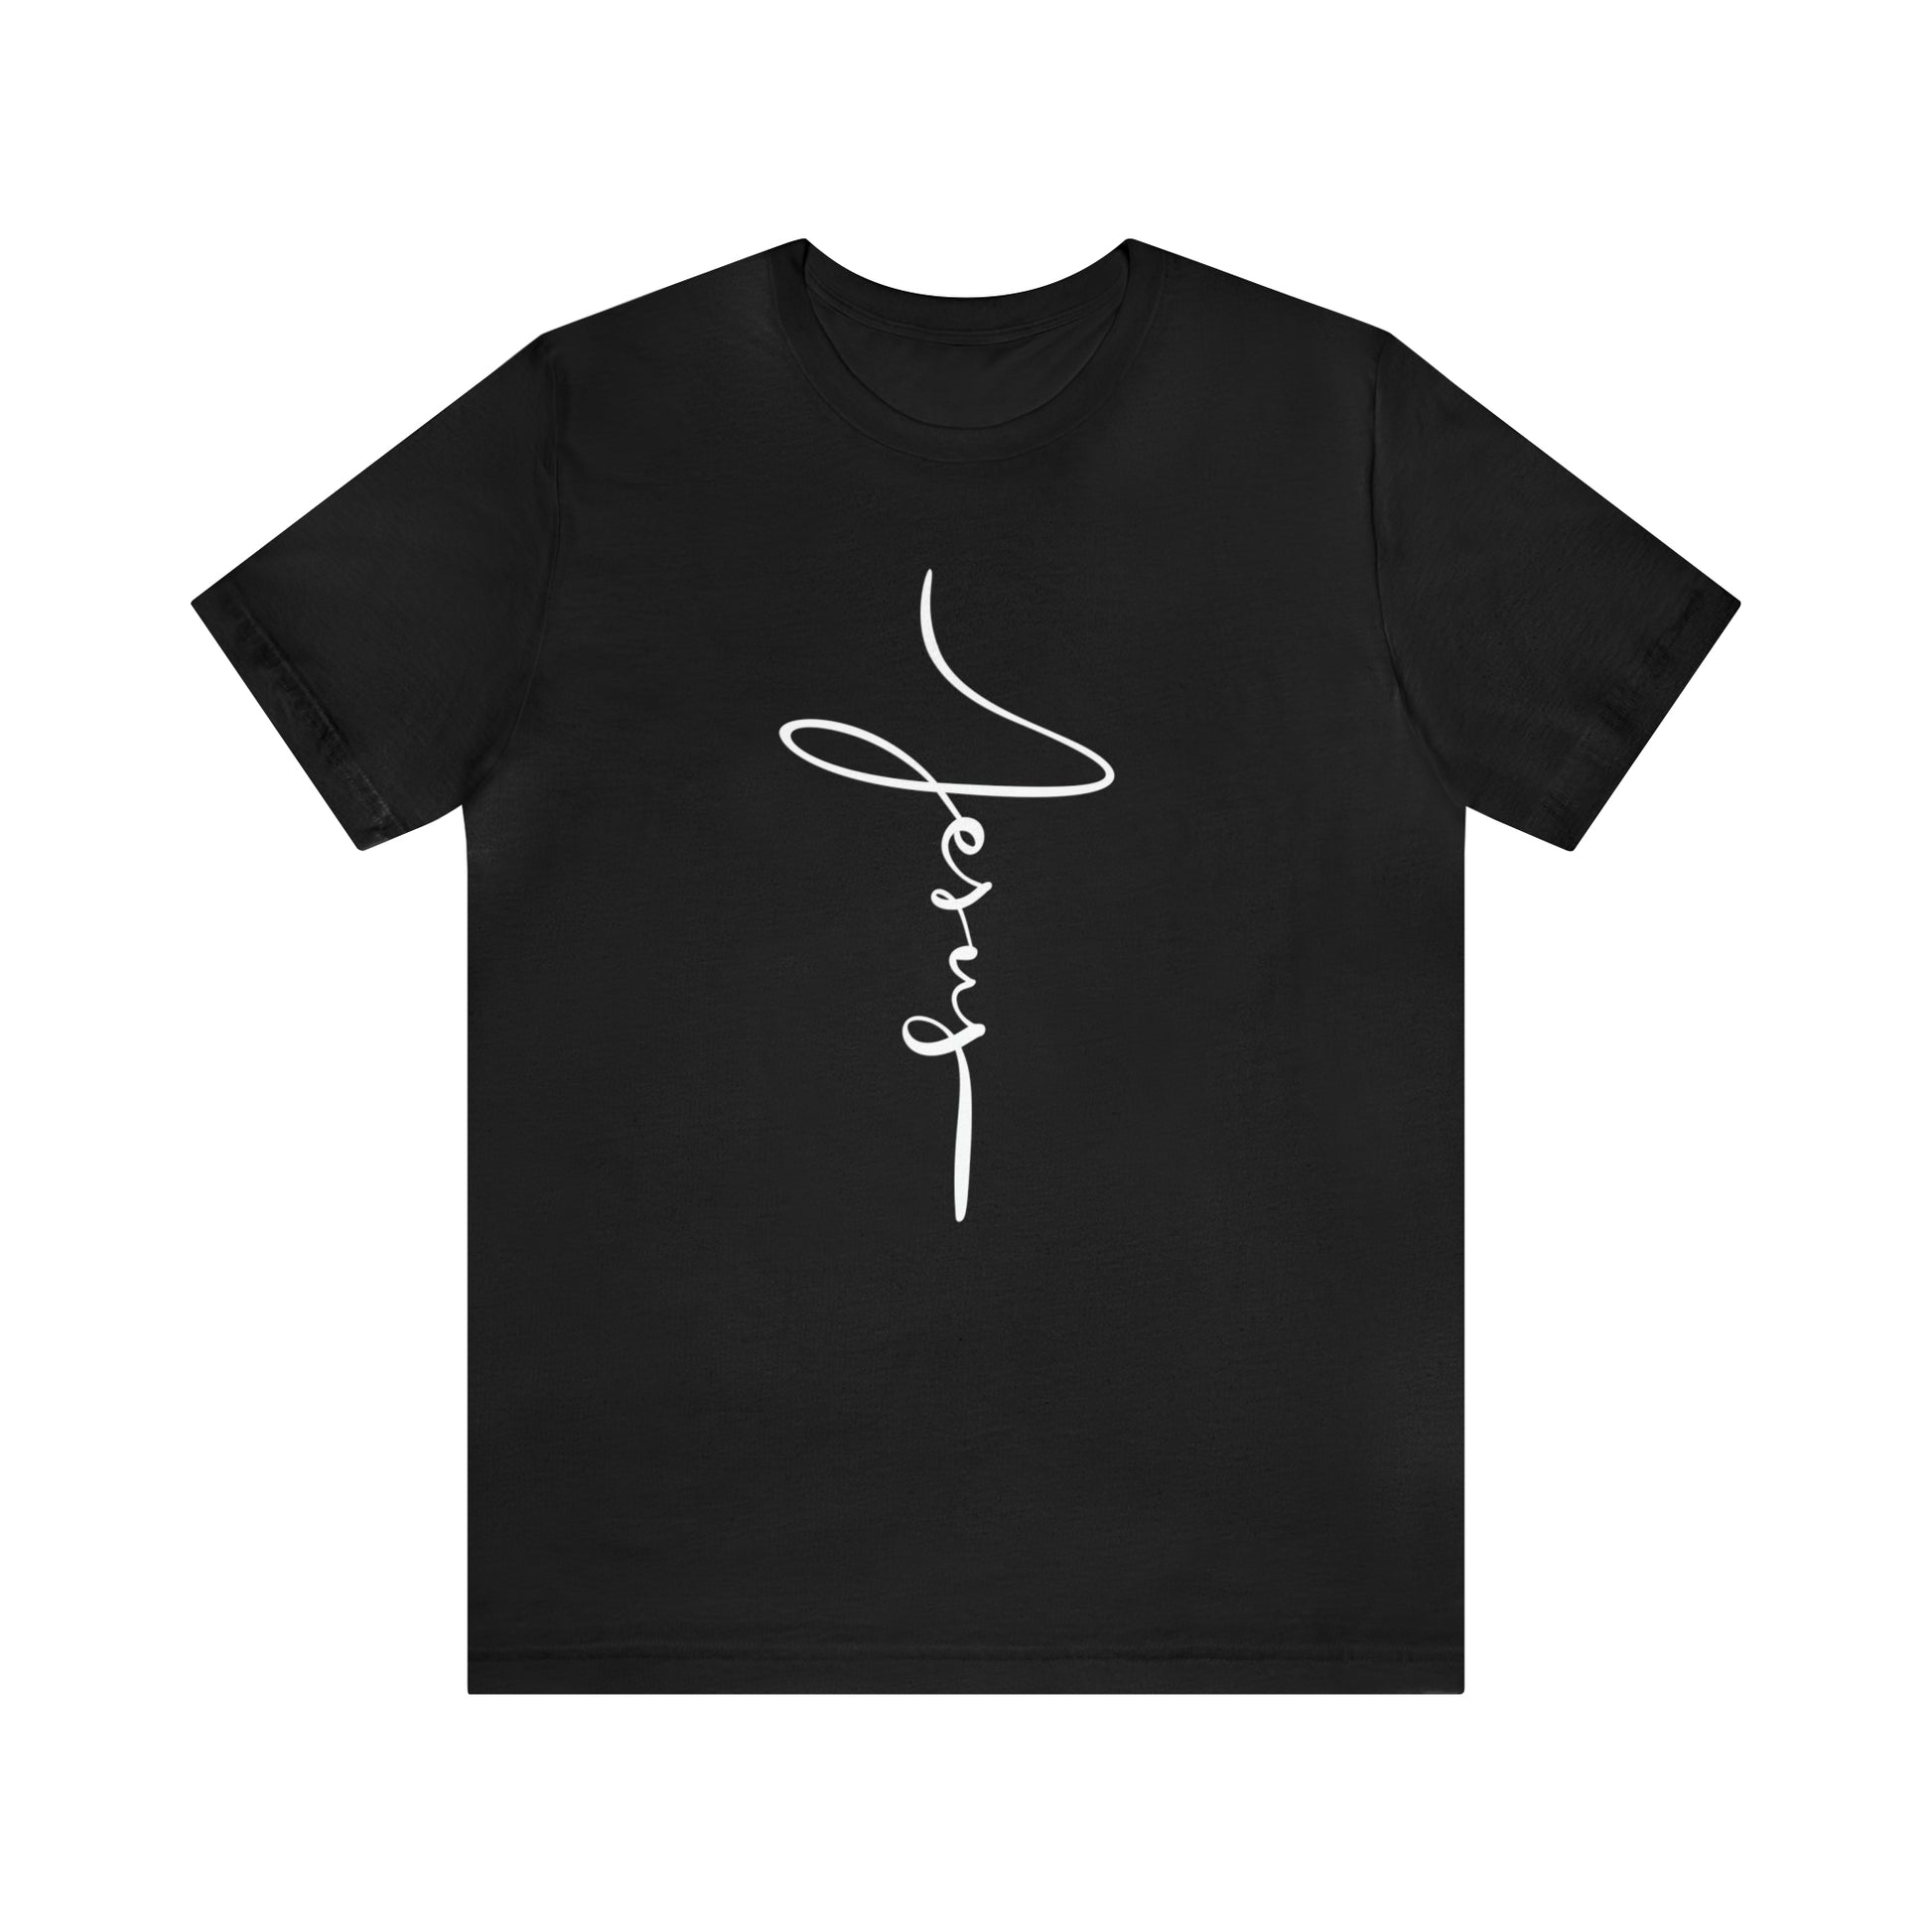 Jesus Cross Christian T-Shirt - Cursive White Font Neutral Color Tees Black mockup